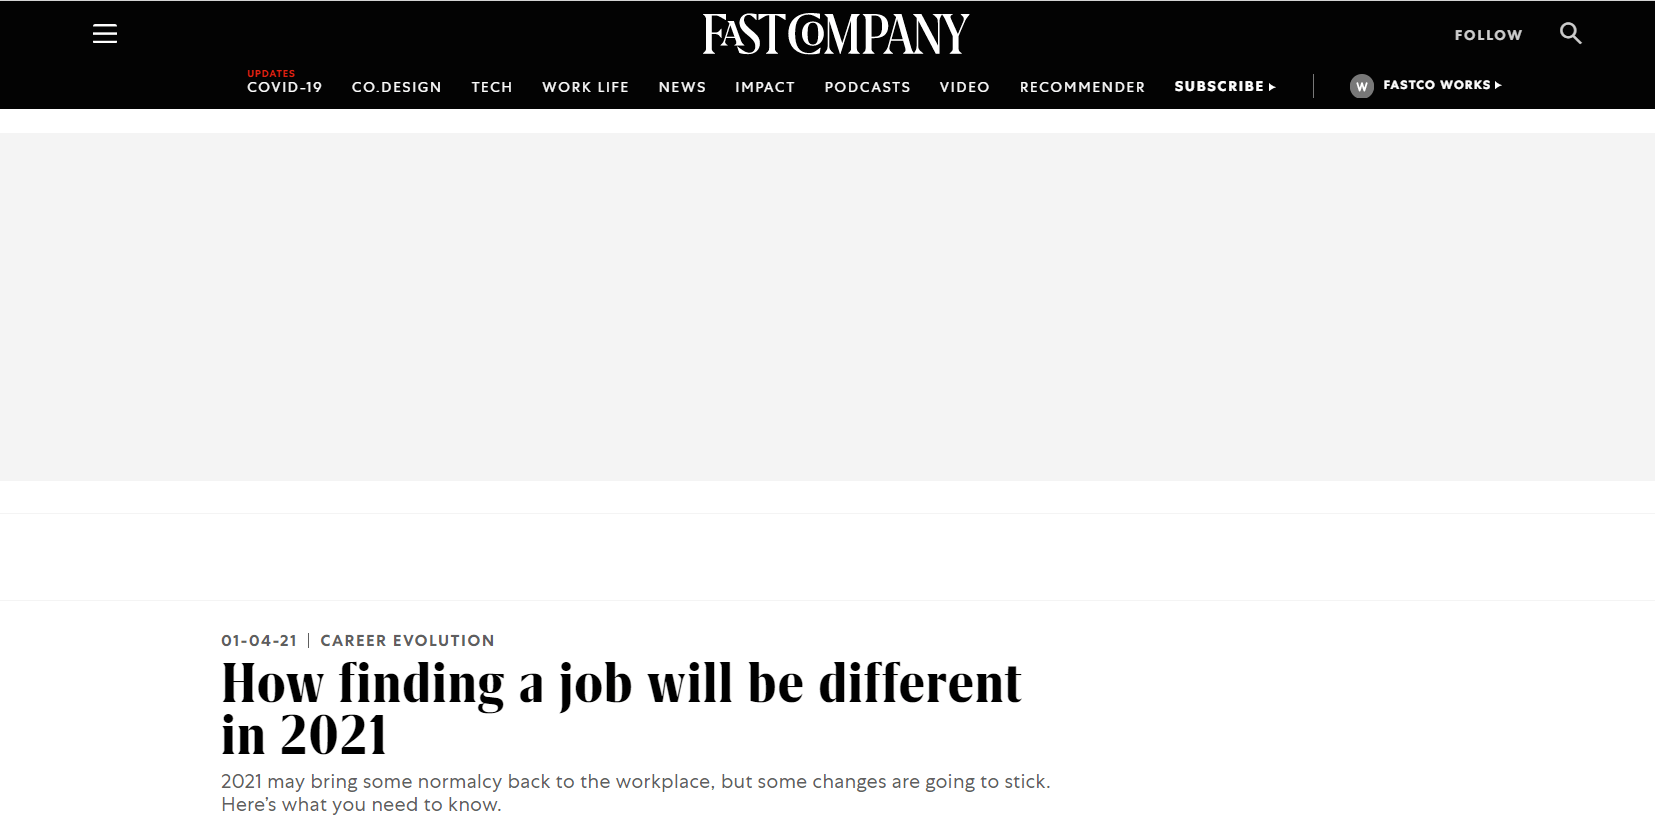 Fast Company - Finding a Job 2021